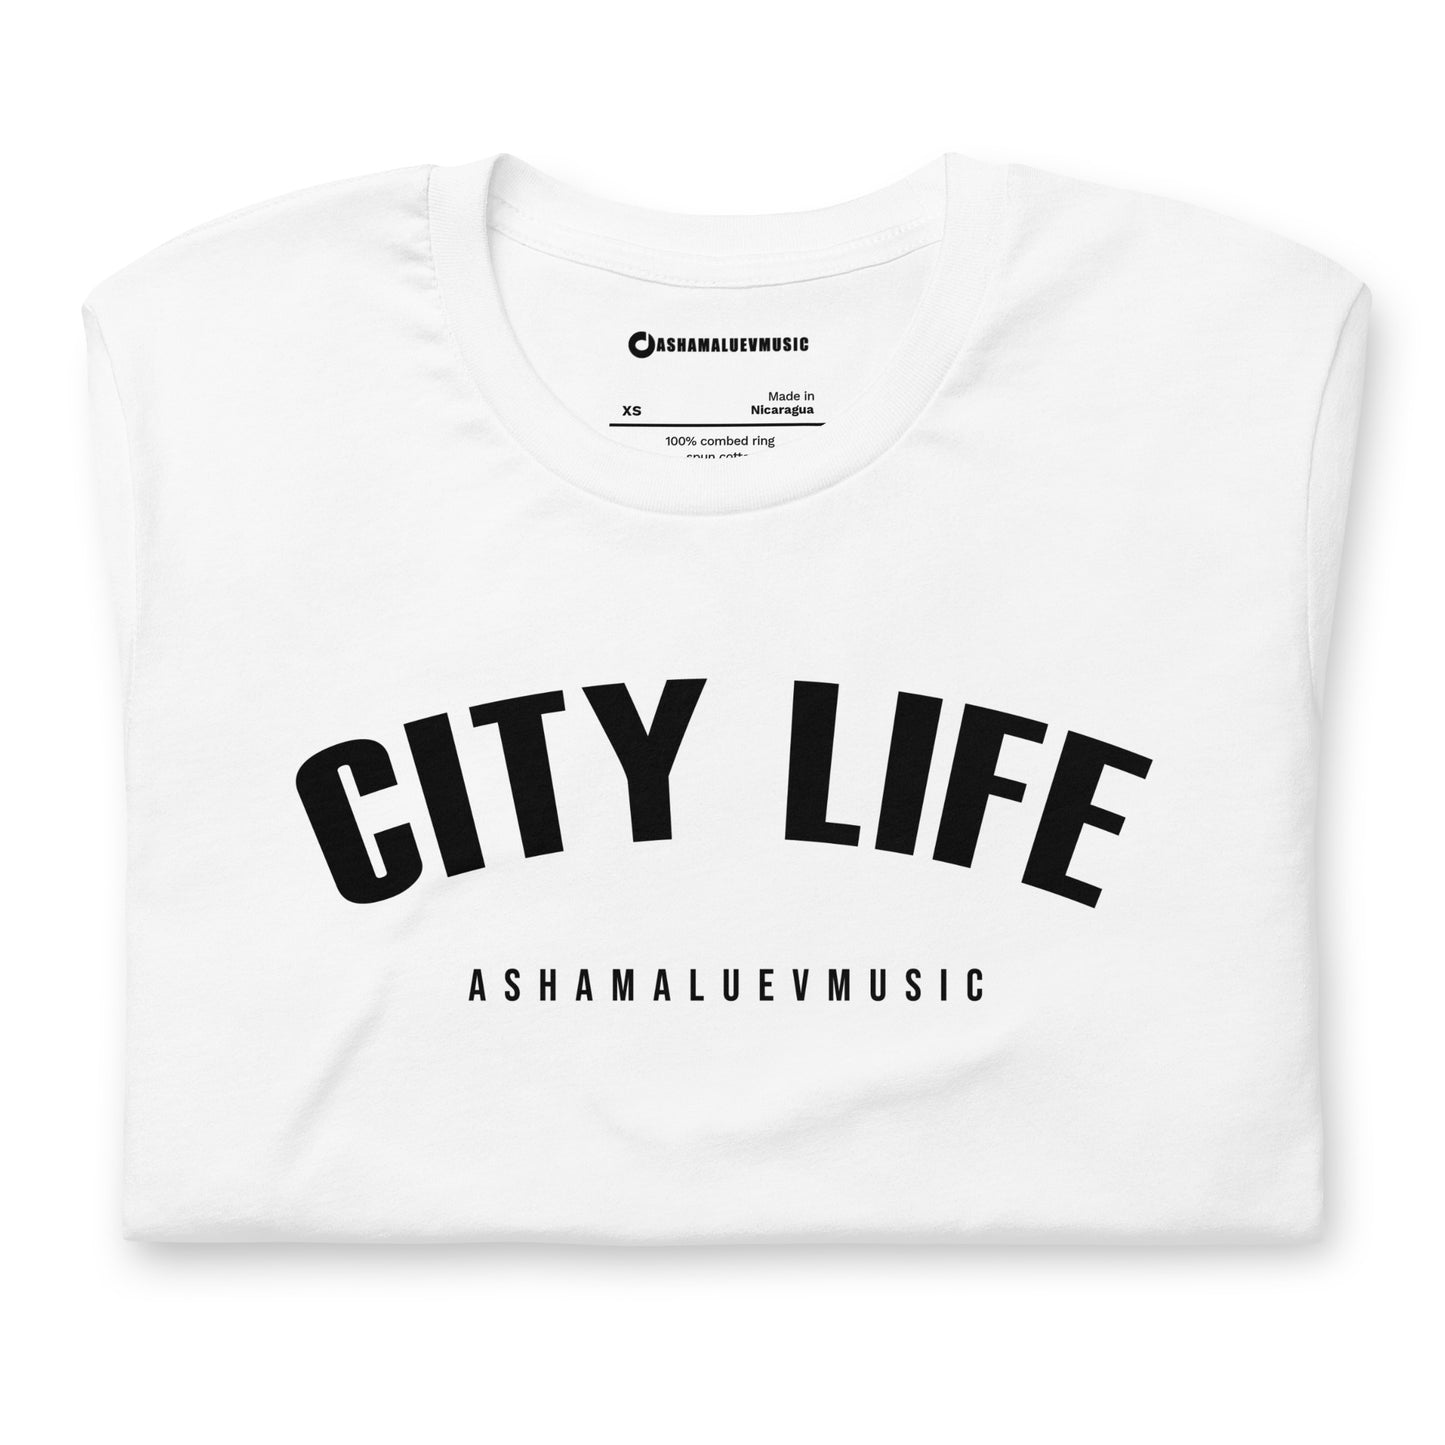 T-shirt "City Life"